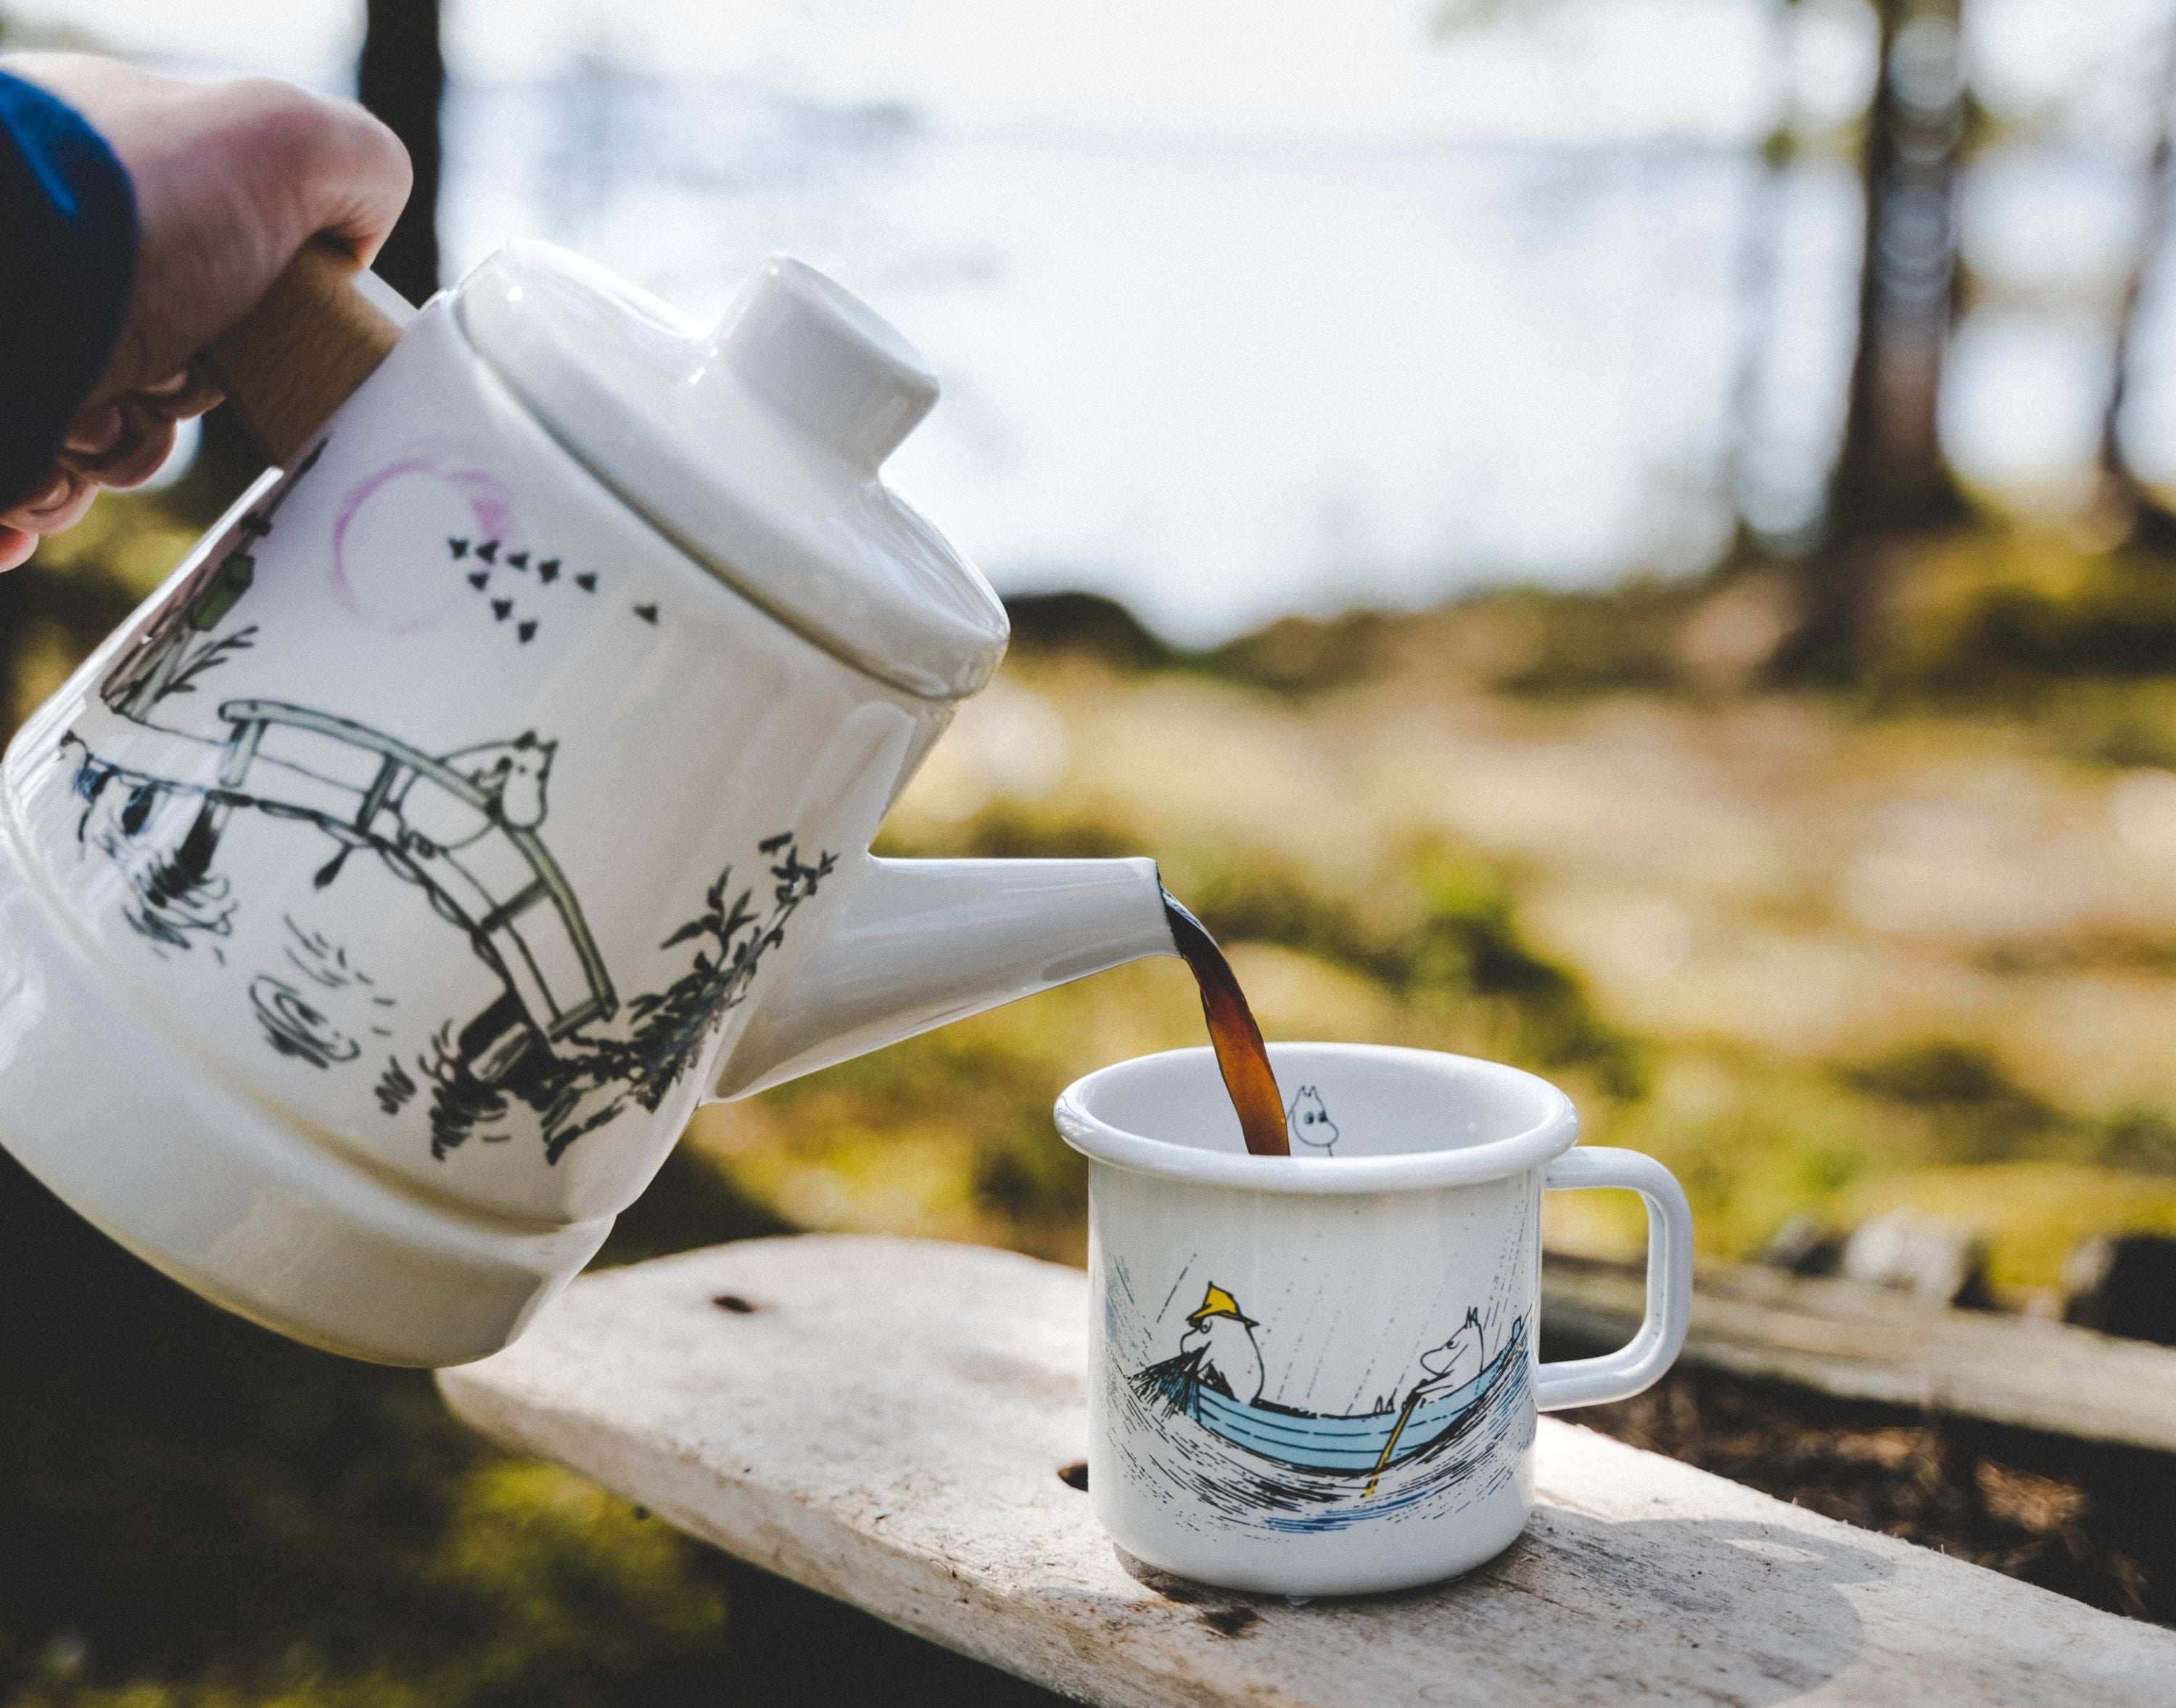 Muurla Moomin Originals emalje kaffekanne som mangler deg